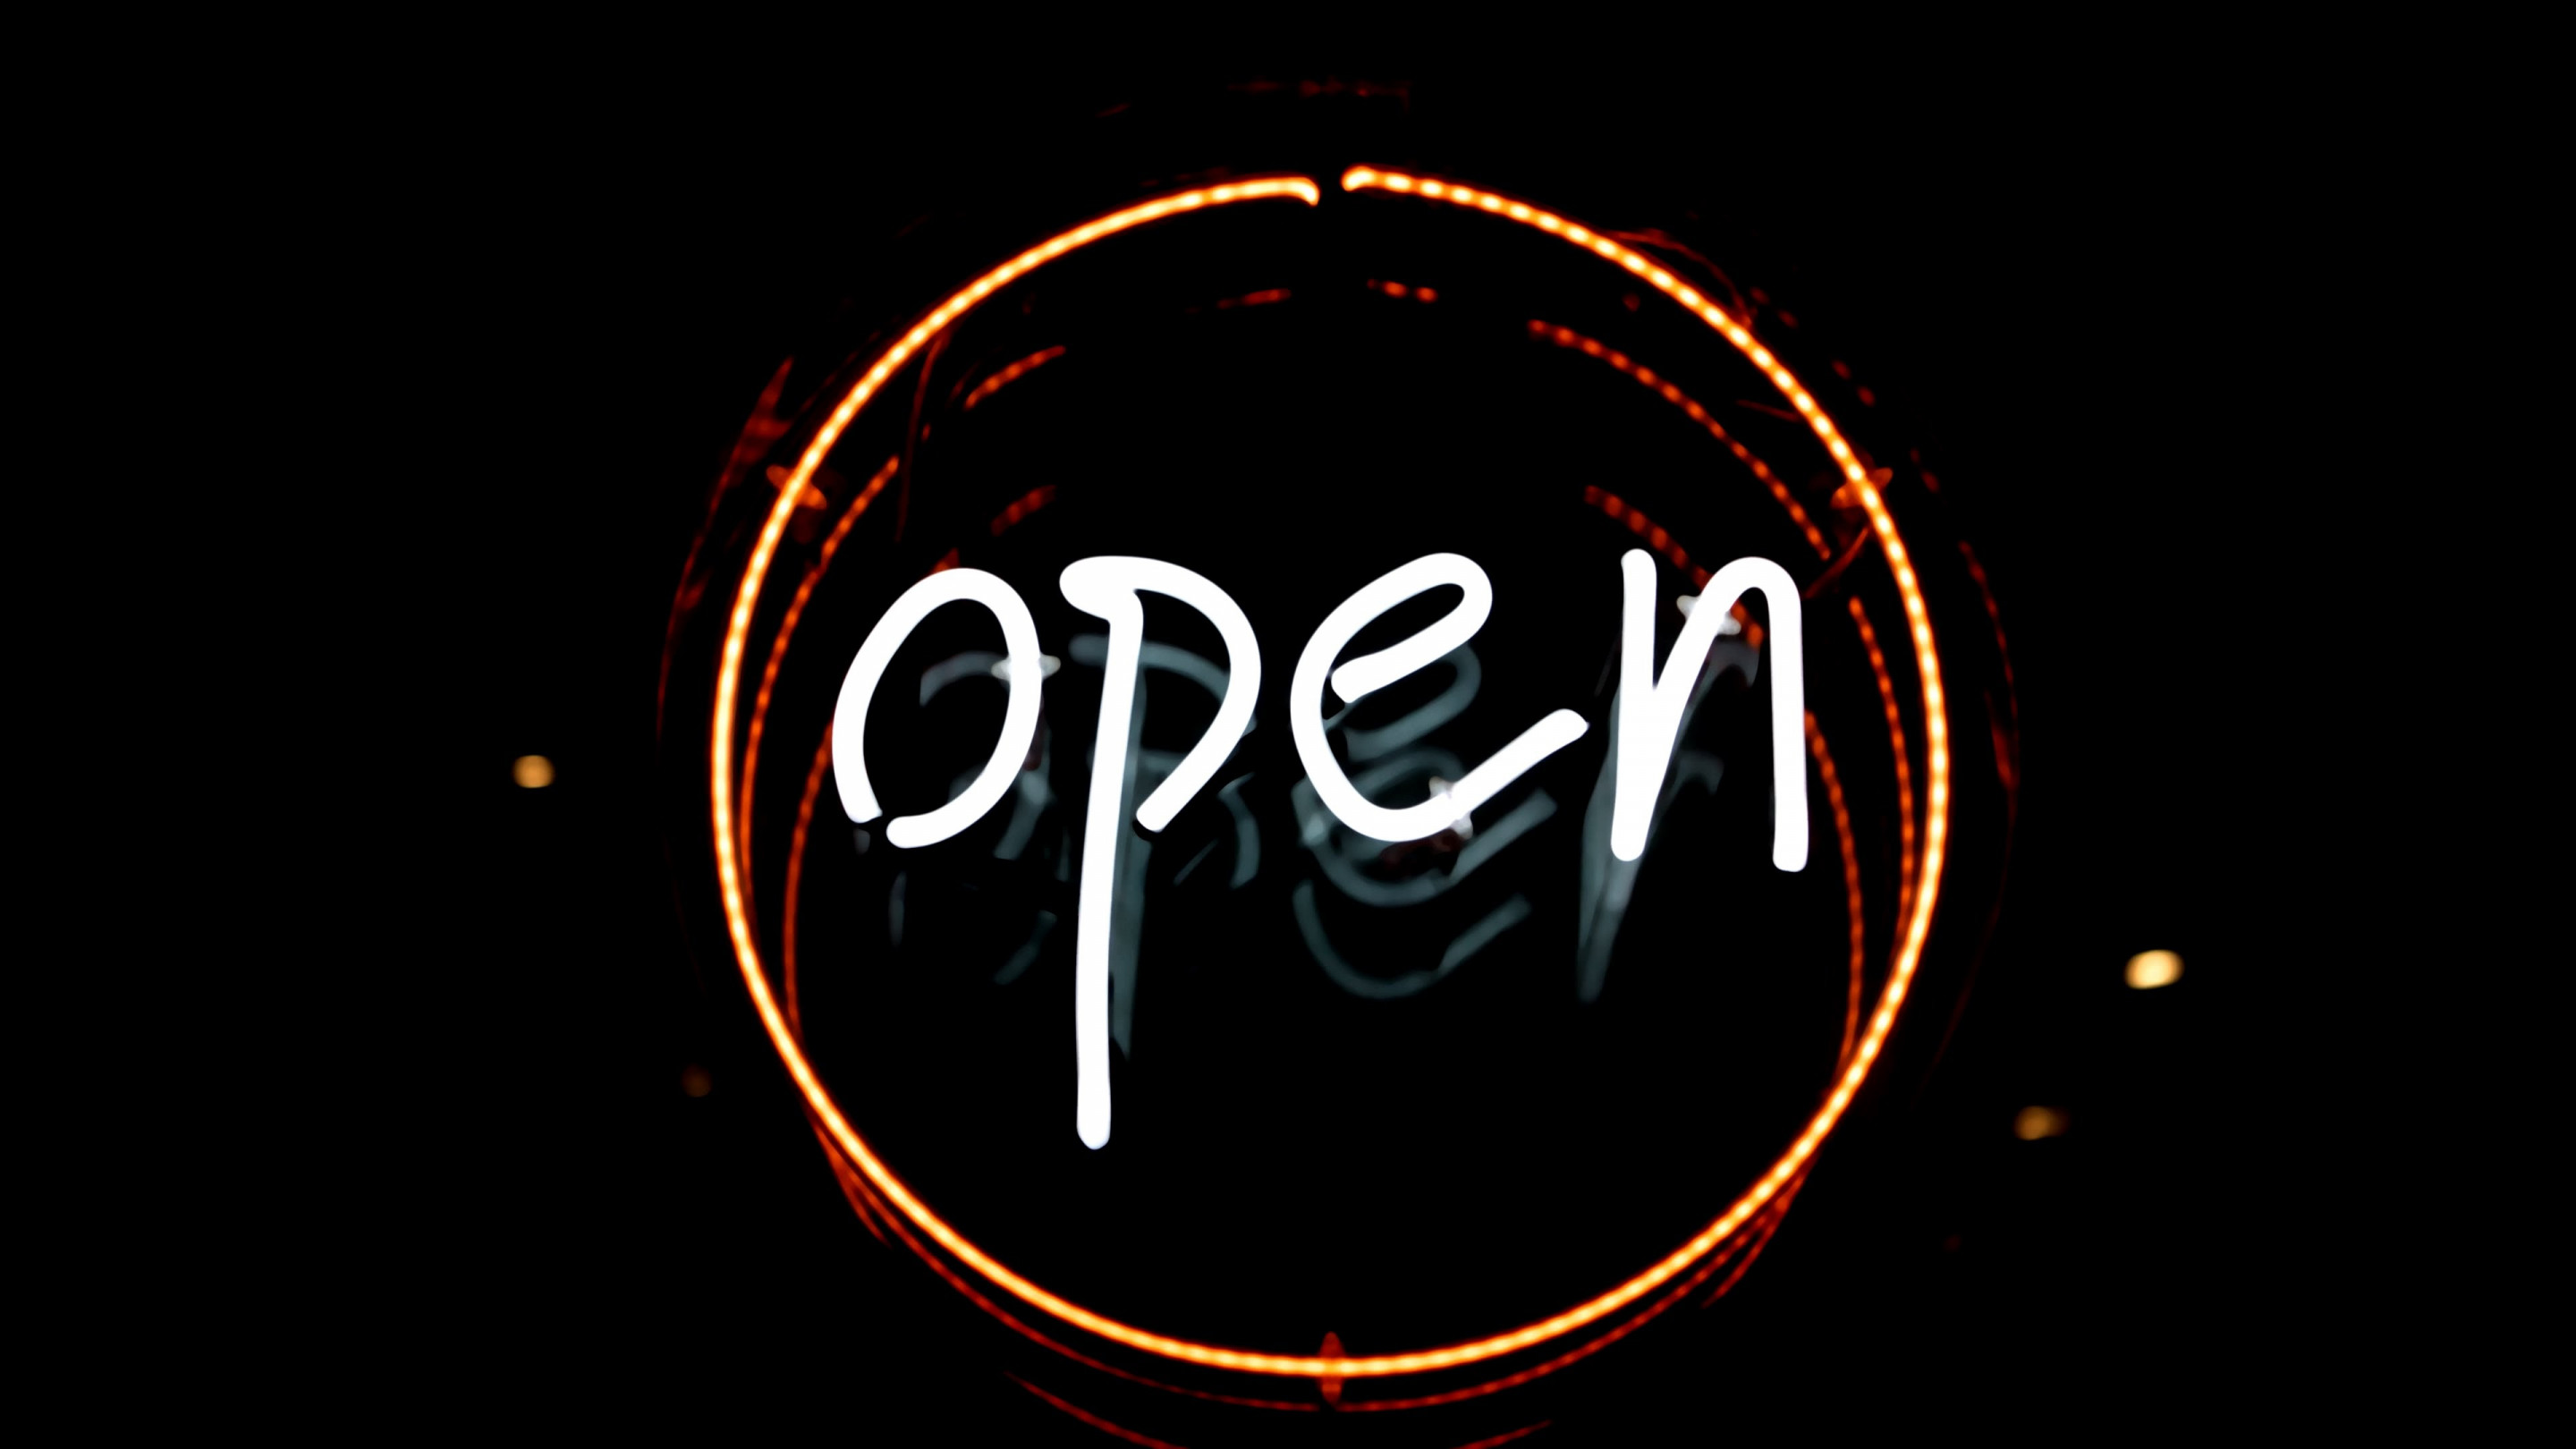 Open logo in light wallpaper 2880x1620